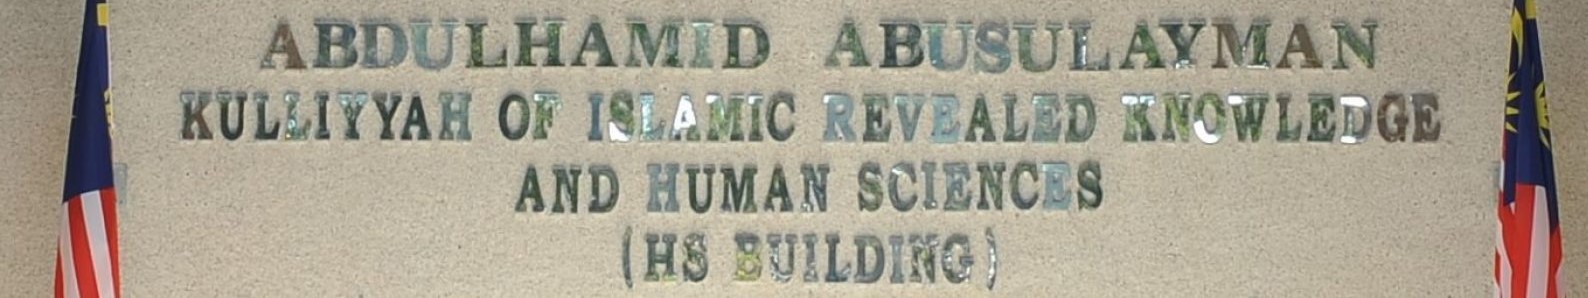 KULLIYYAH OF ISLAMIC REVEALED KNOWLEDGE AND HUMAN SCIENCES